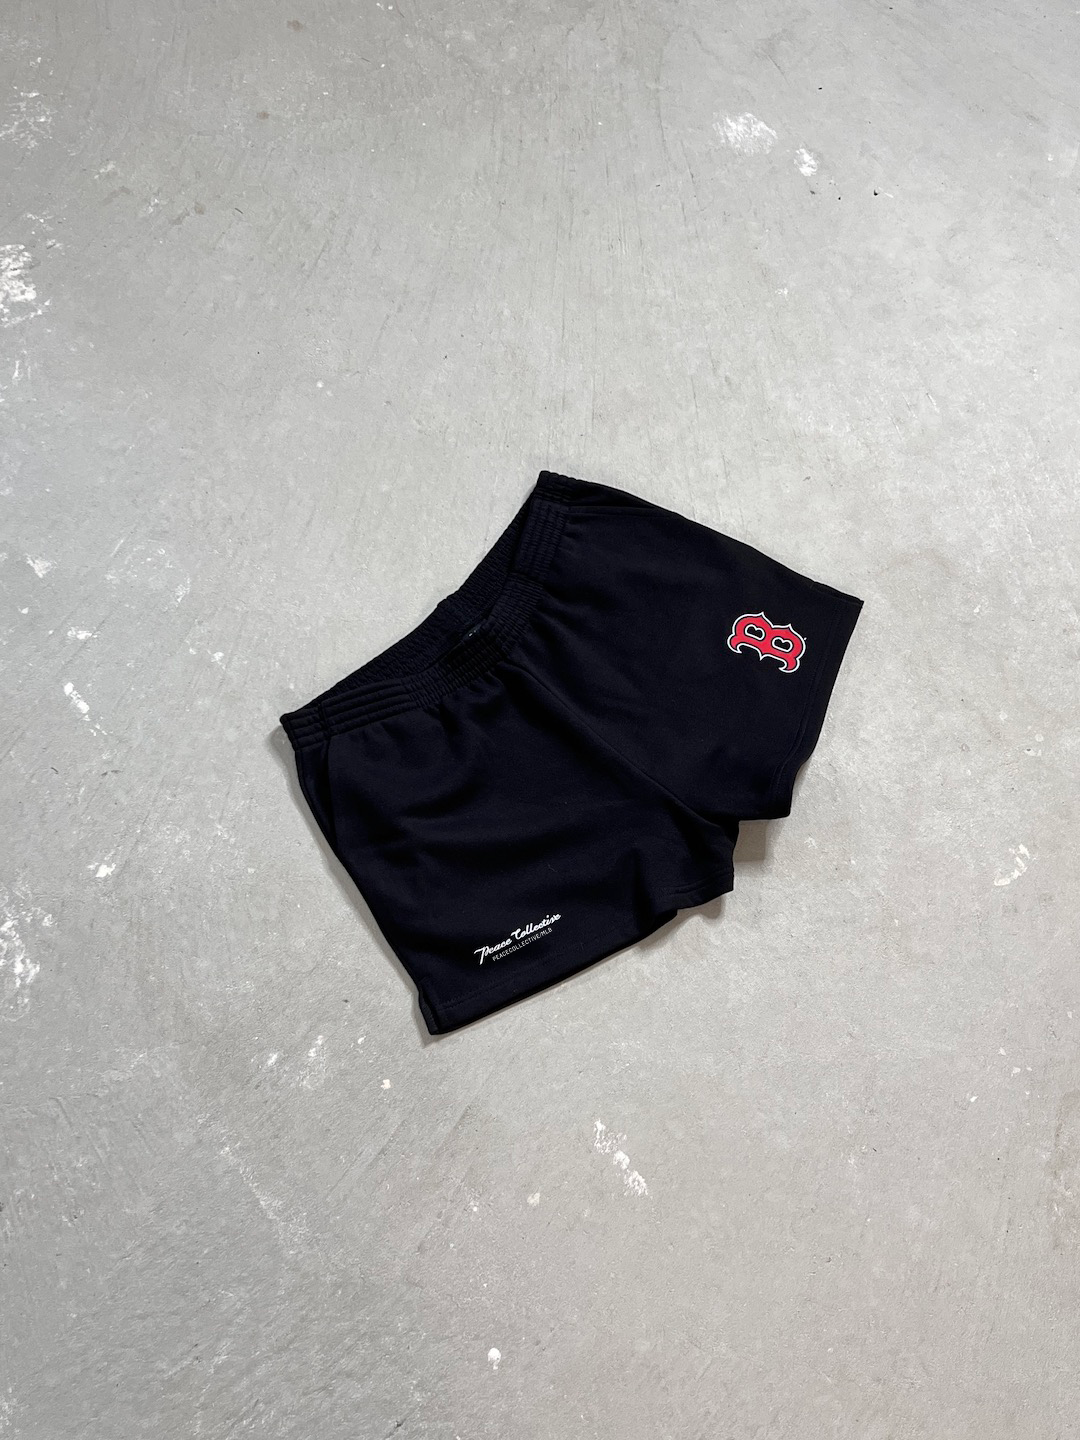 Boston Red Sox Women's Fleece Shorts - Black